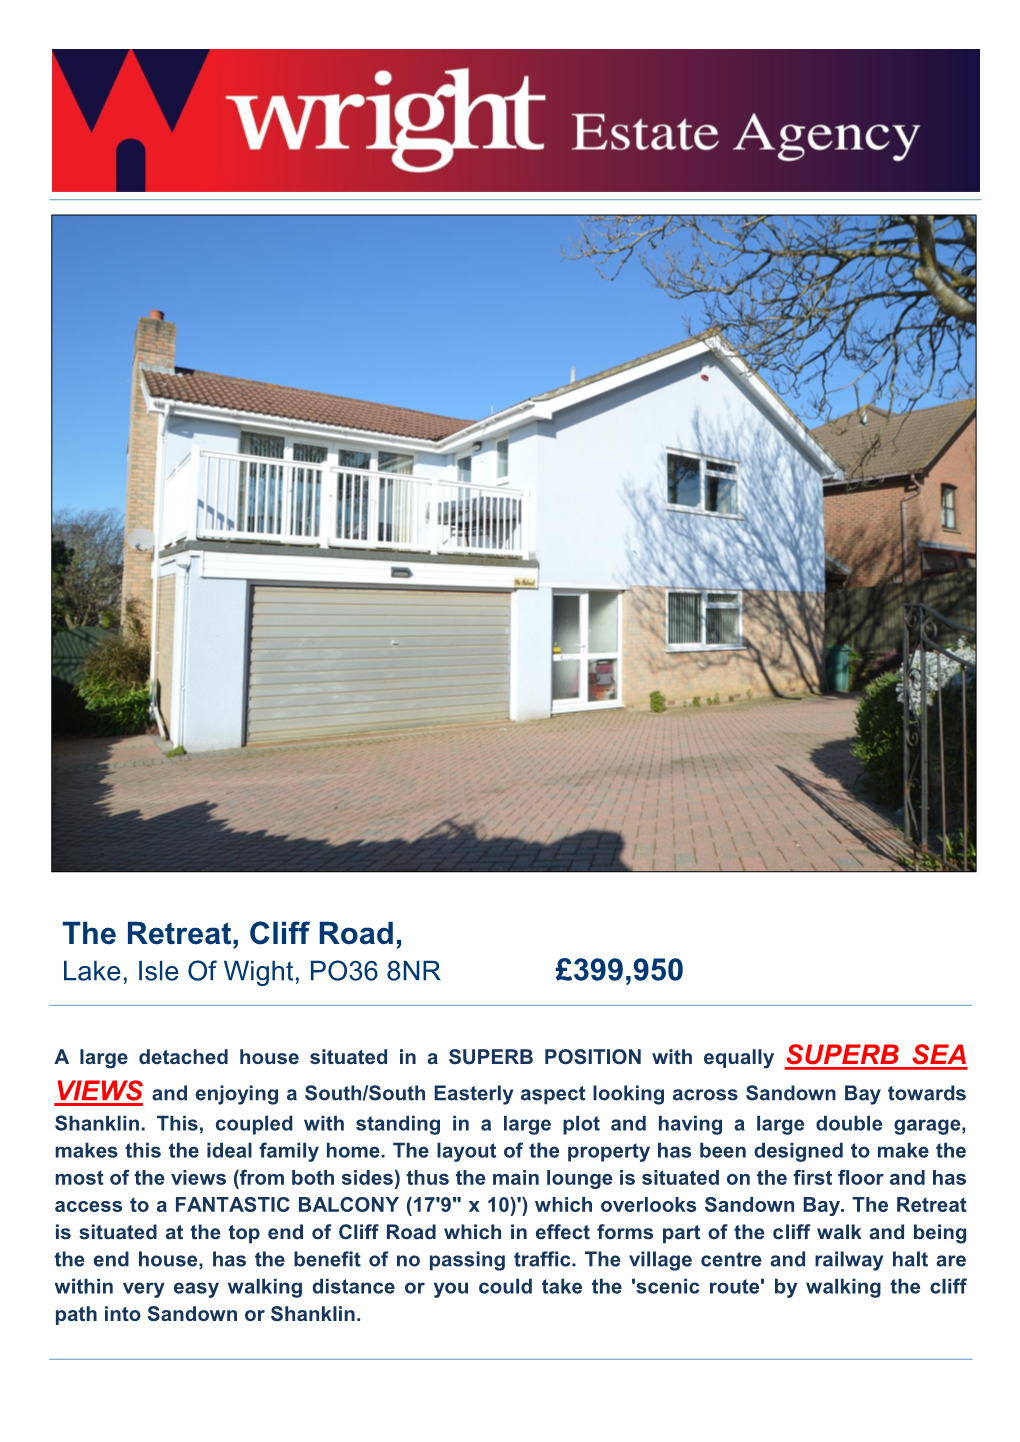 The Retreat, Cliff Road, £399,950